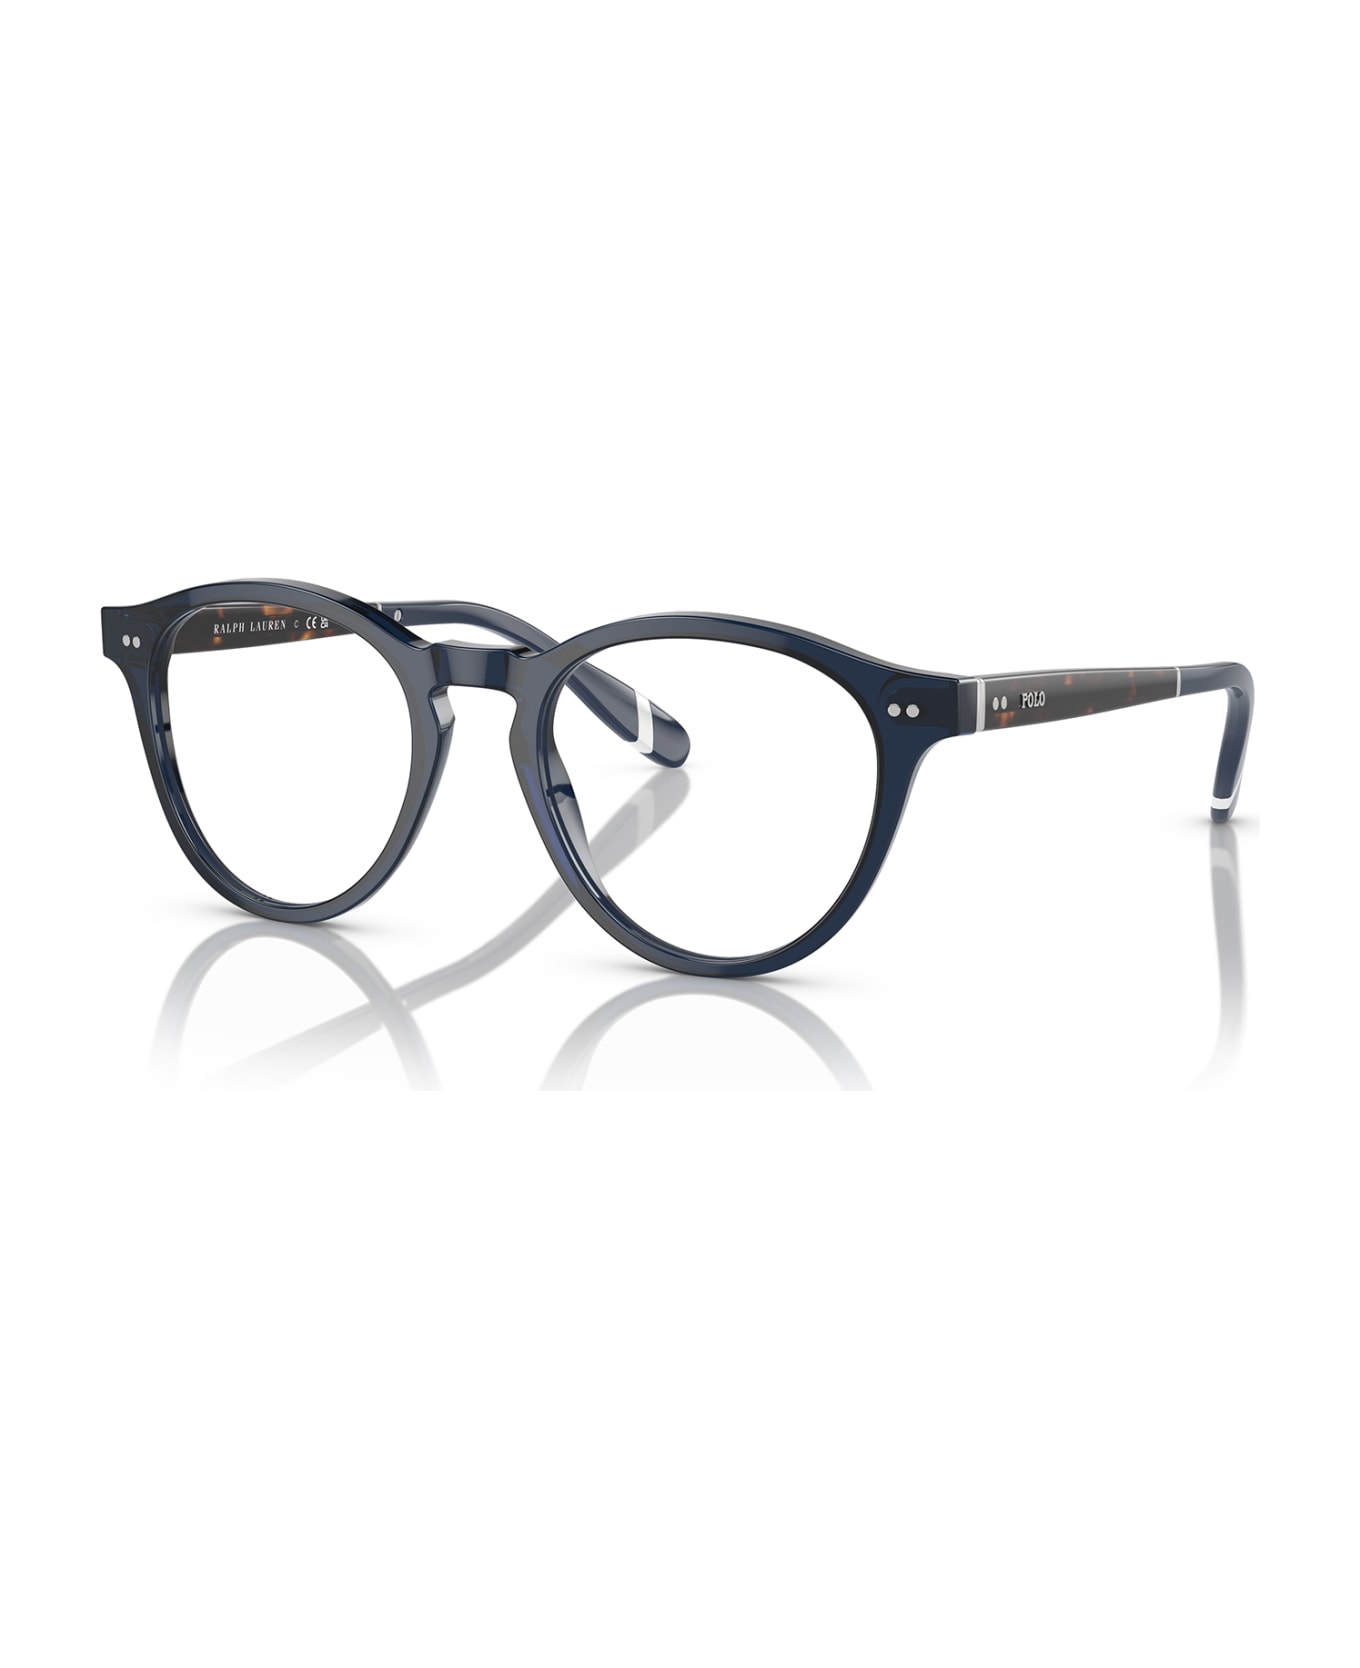 Polo Ralph Lauren Ph2268 Shiny Transparent Blue Glasses - Shiny Transparent Blue アイウェア